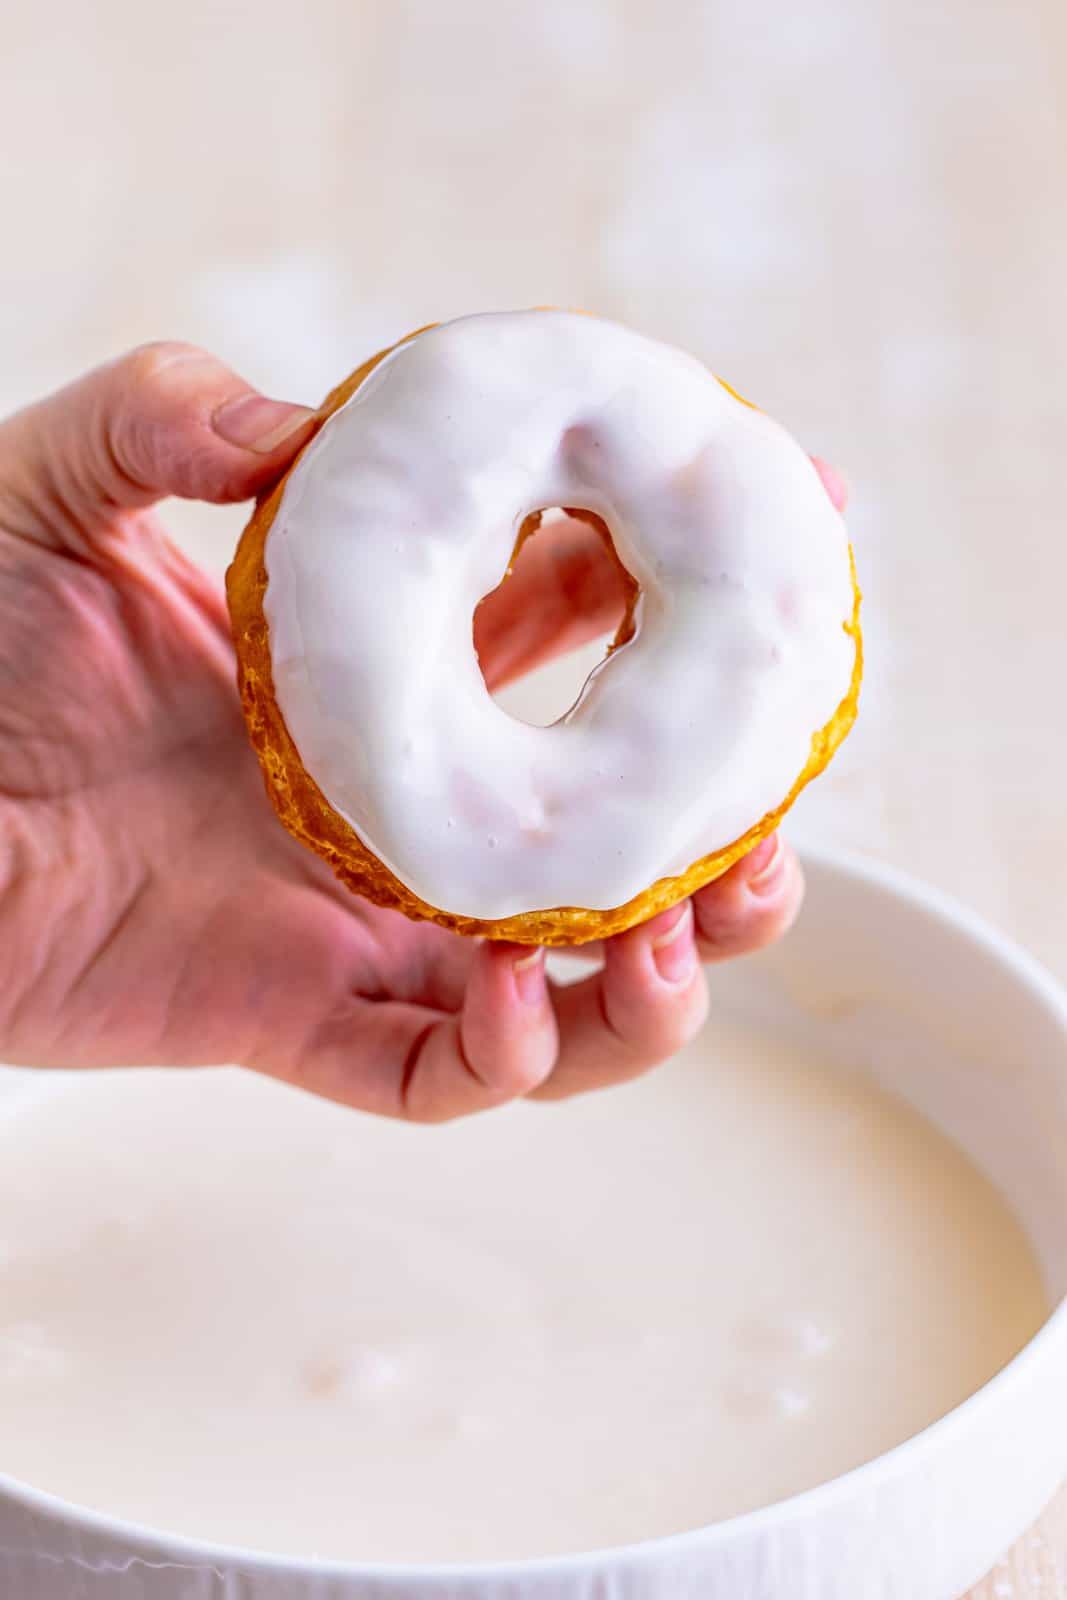 A hand holding a vanilla glazed donut.